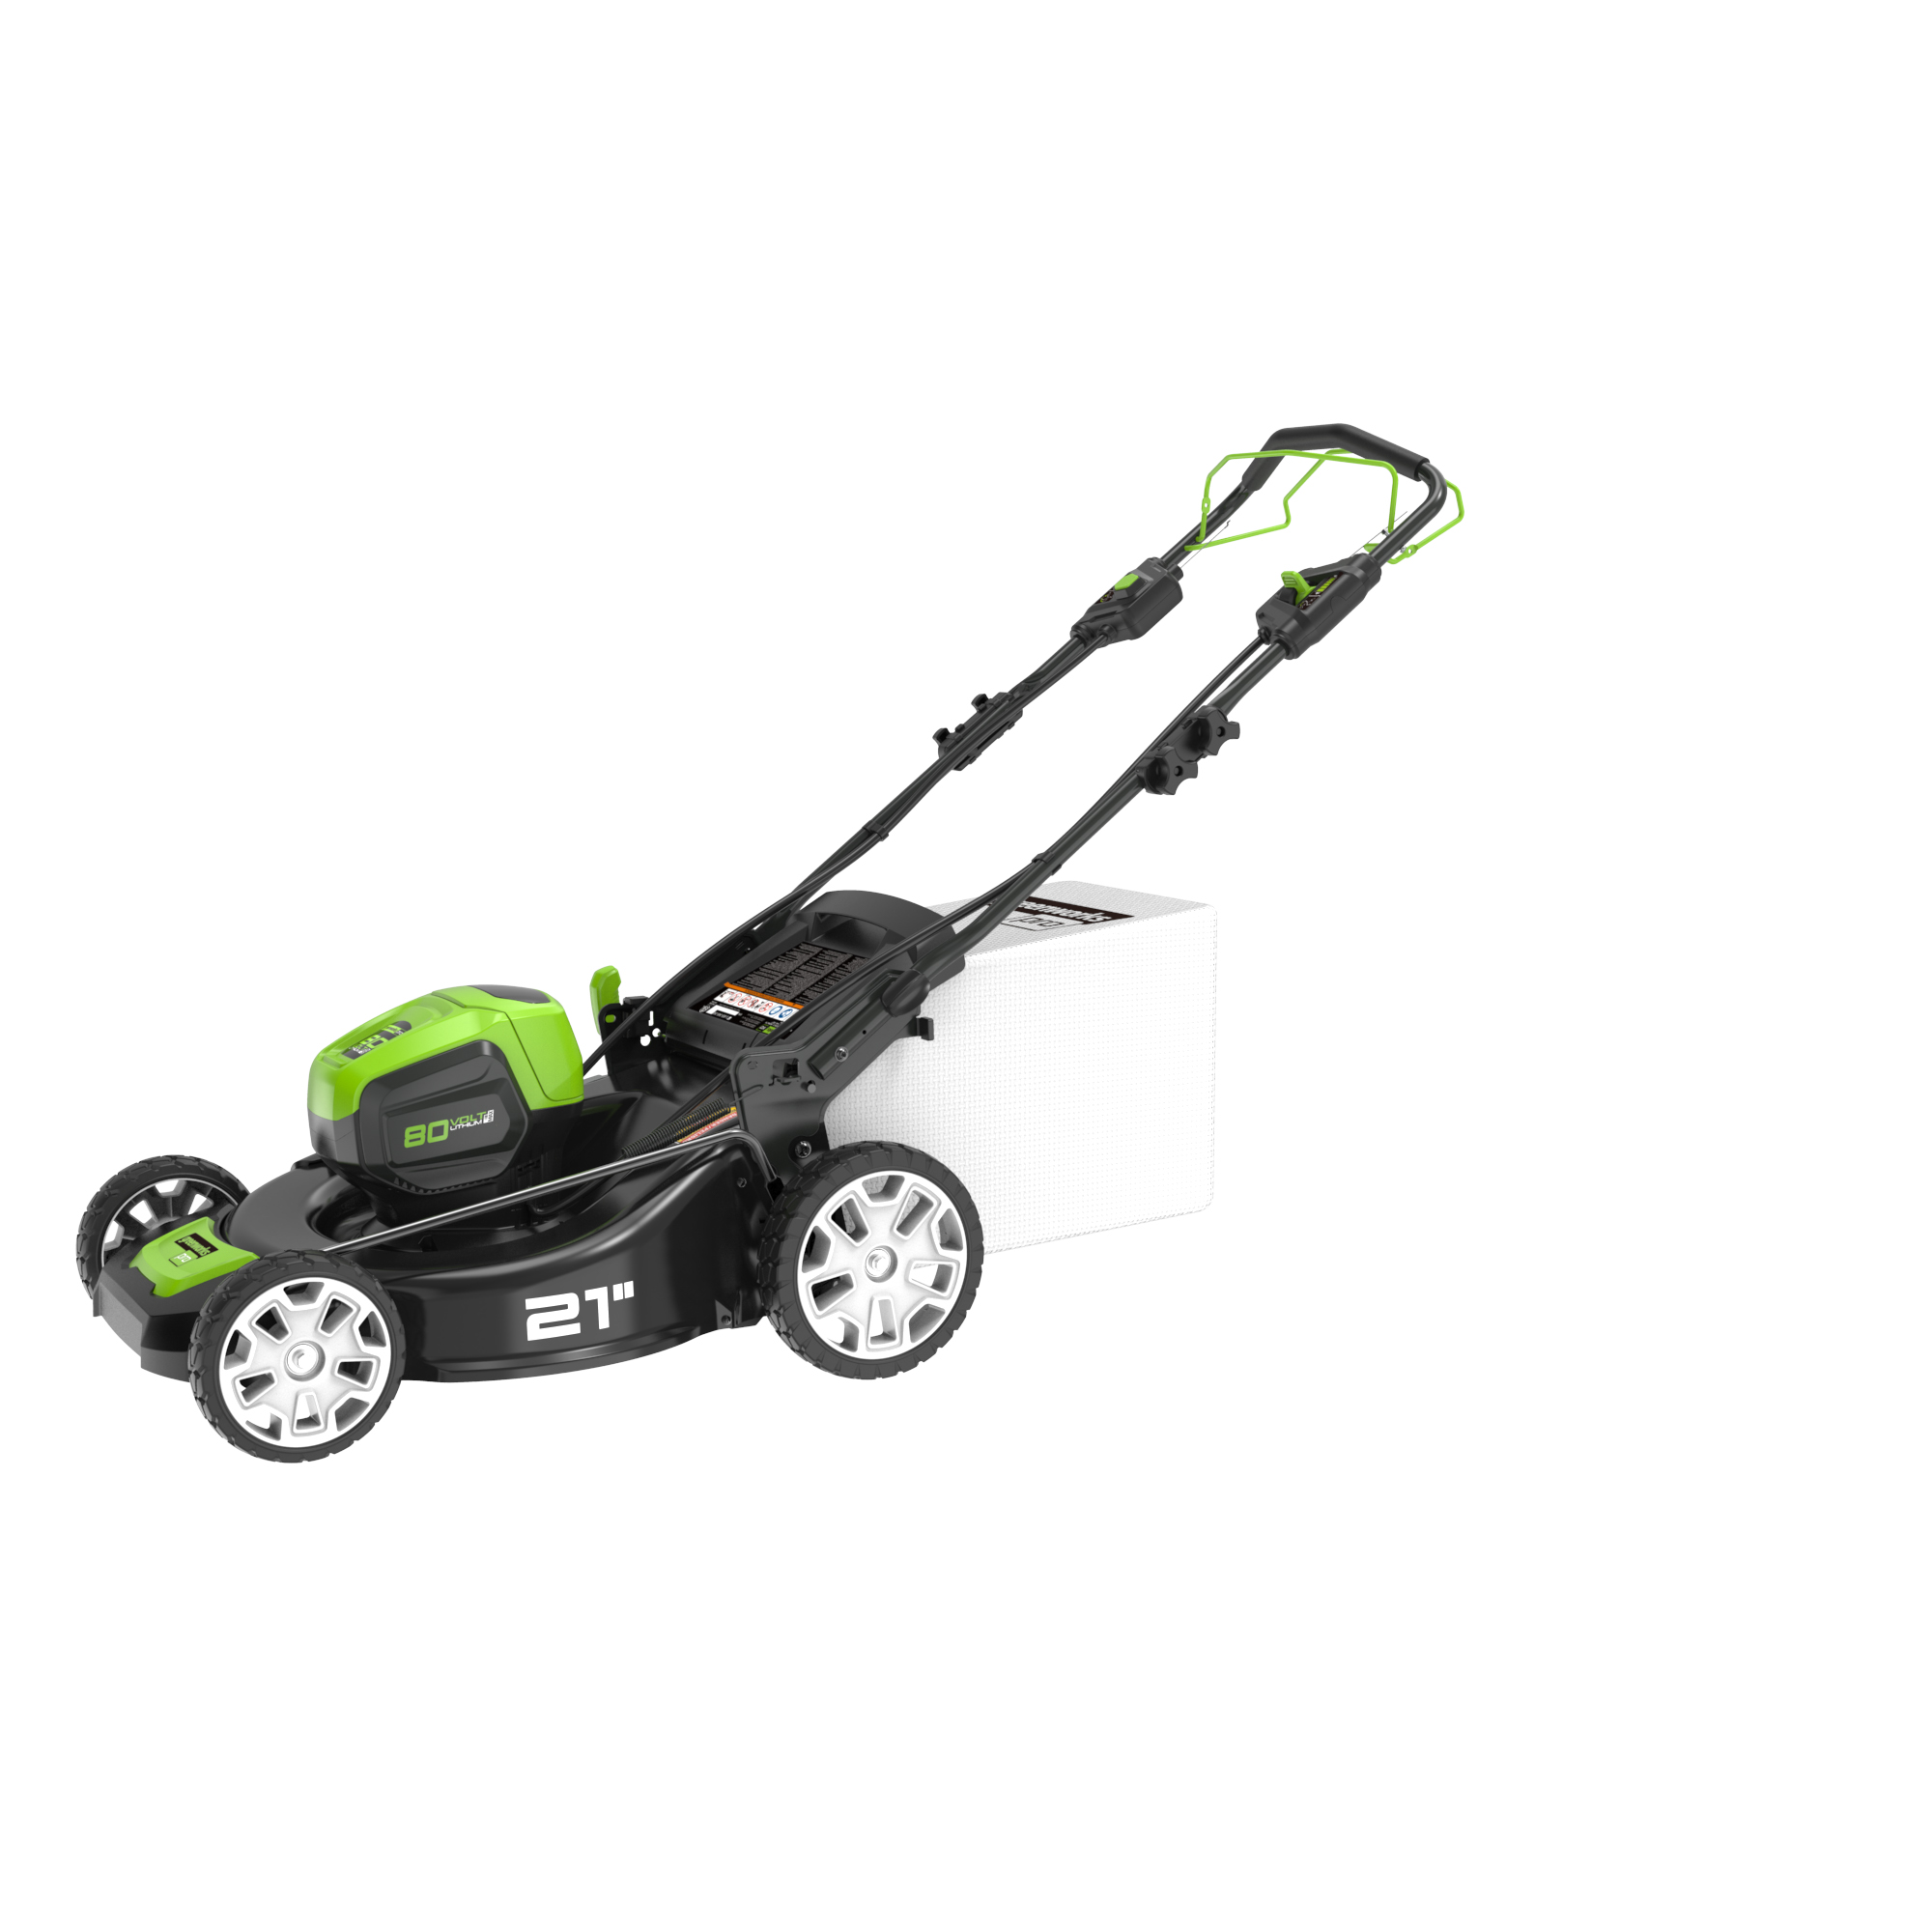 80V 21-Inch Cordless Lawn Mower